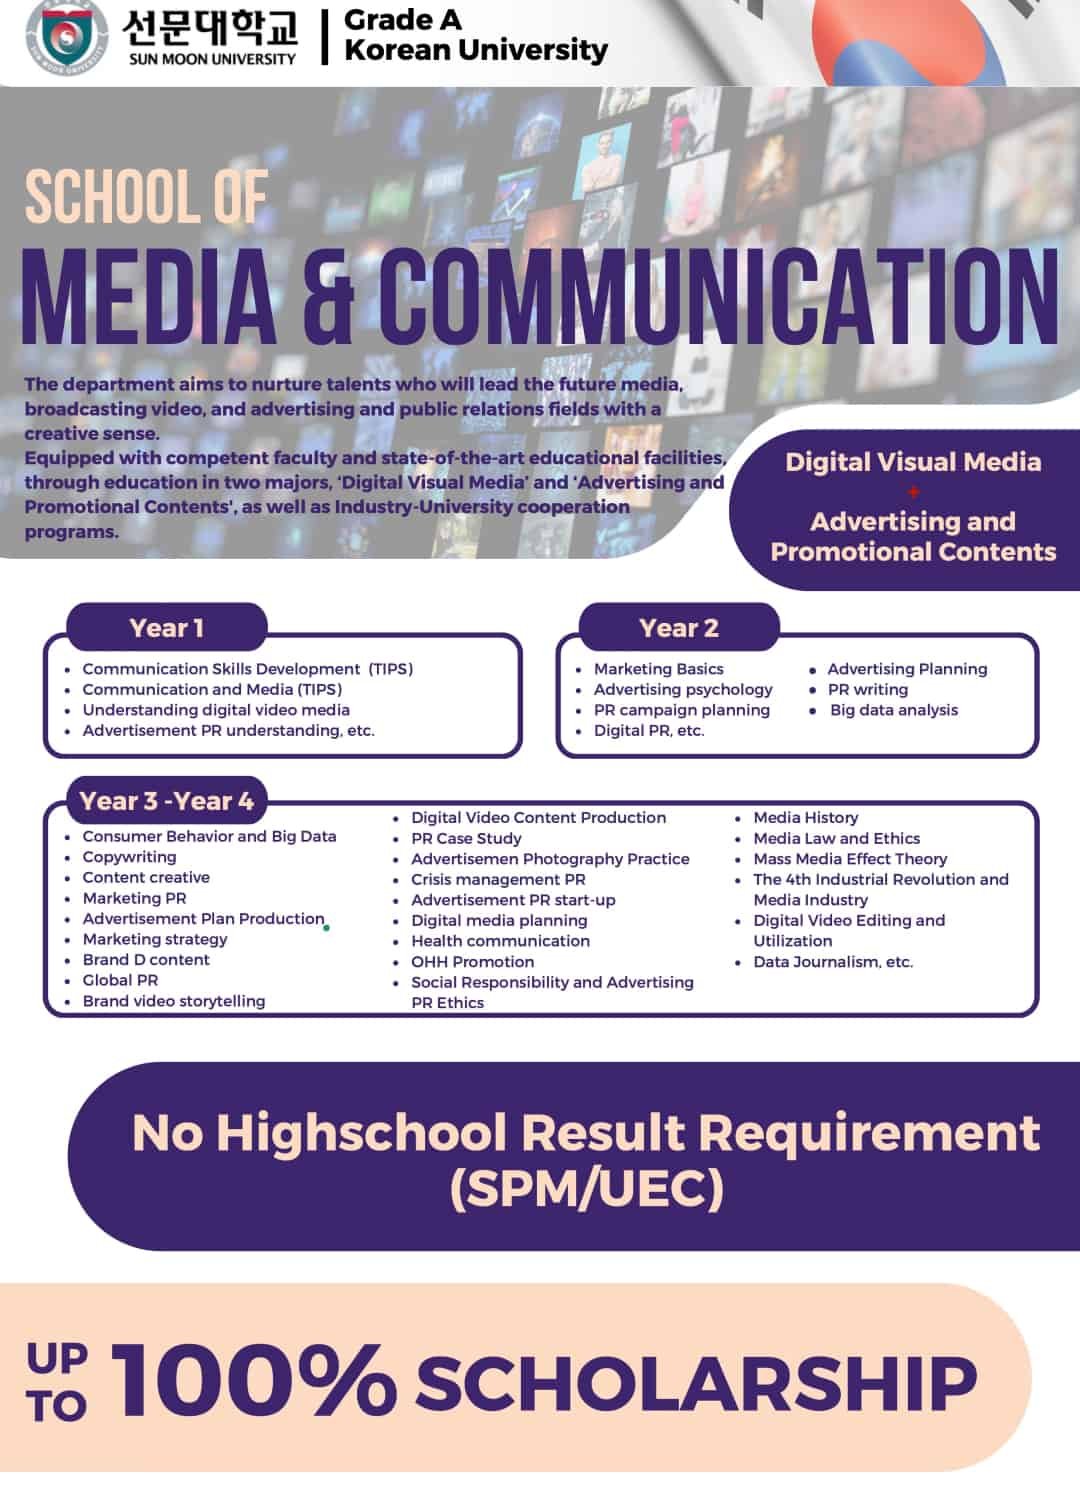  Media _ Communication